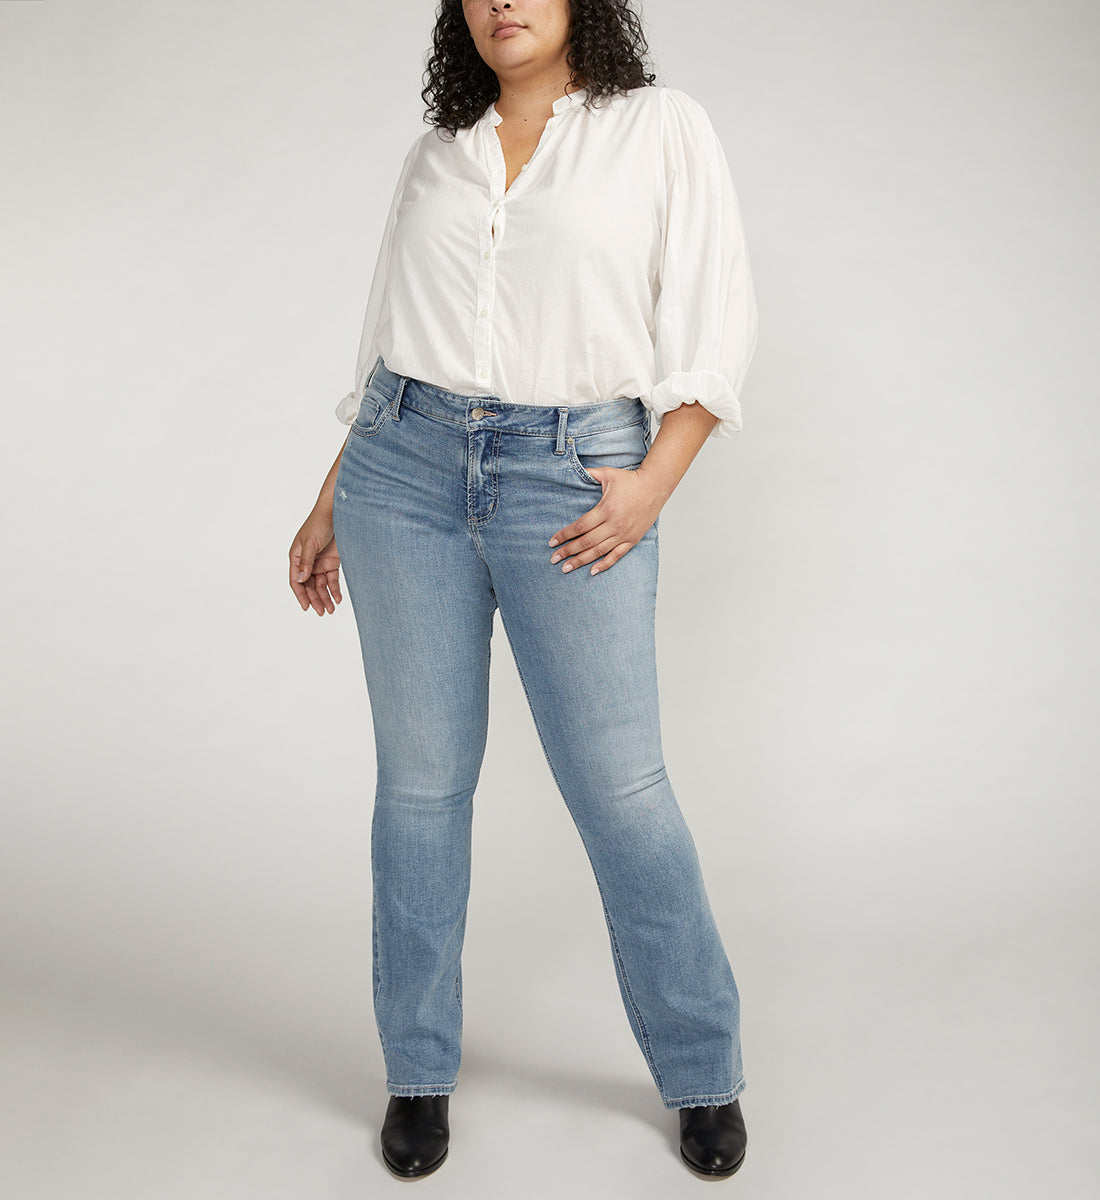 Elyse Mid Rise Slim Bootcut Jeans Plus Size